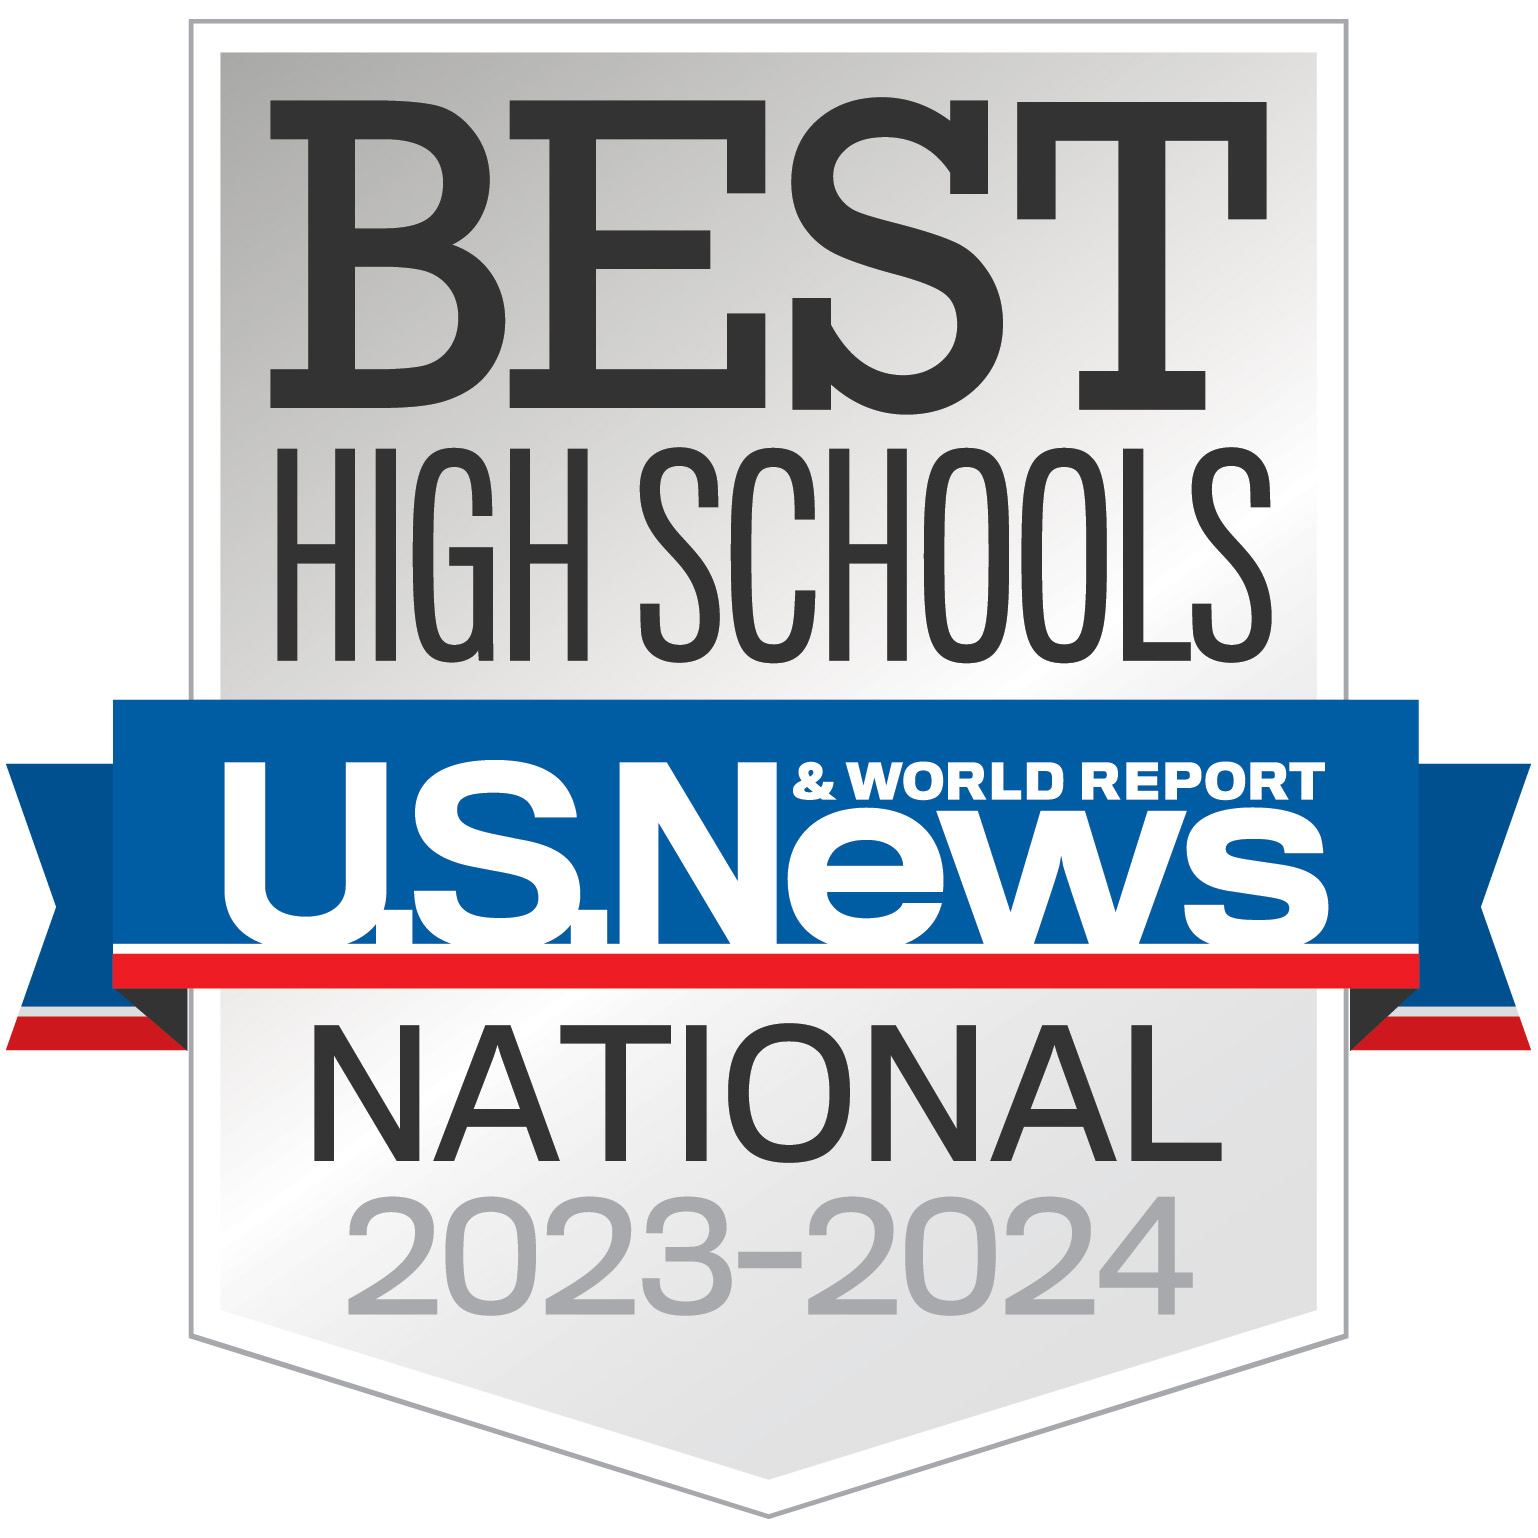 U.S. News & World Report Best High Schools 2023-2024 Award Badge